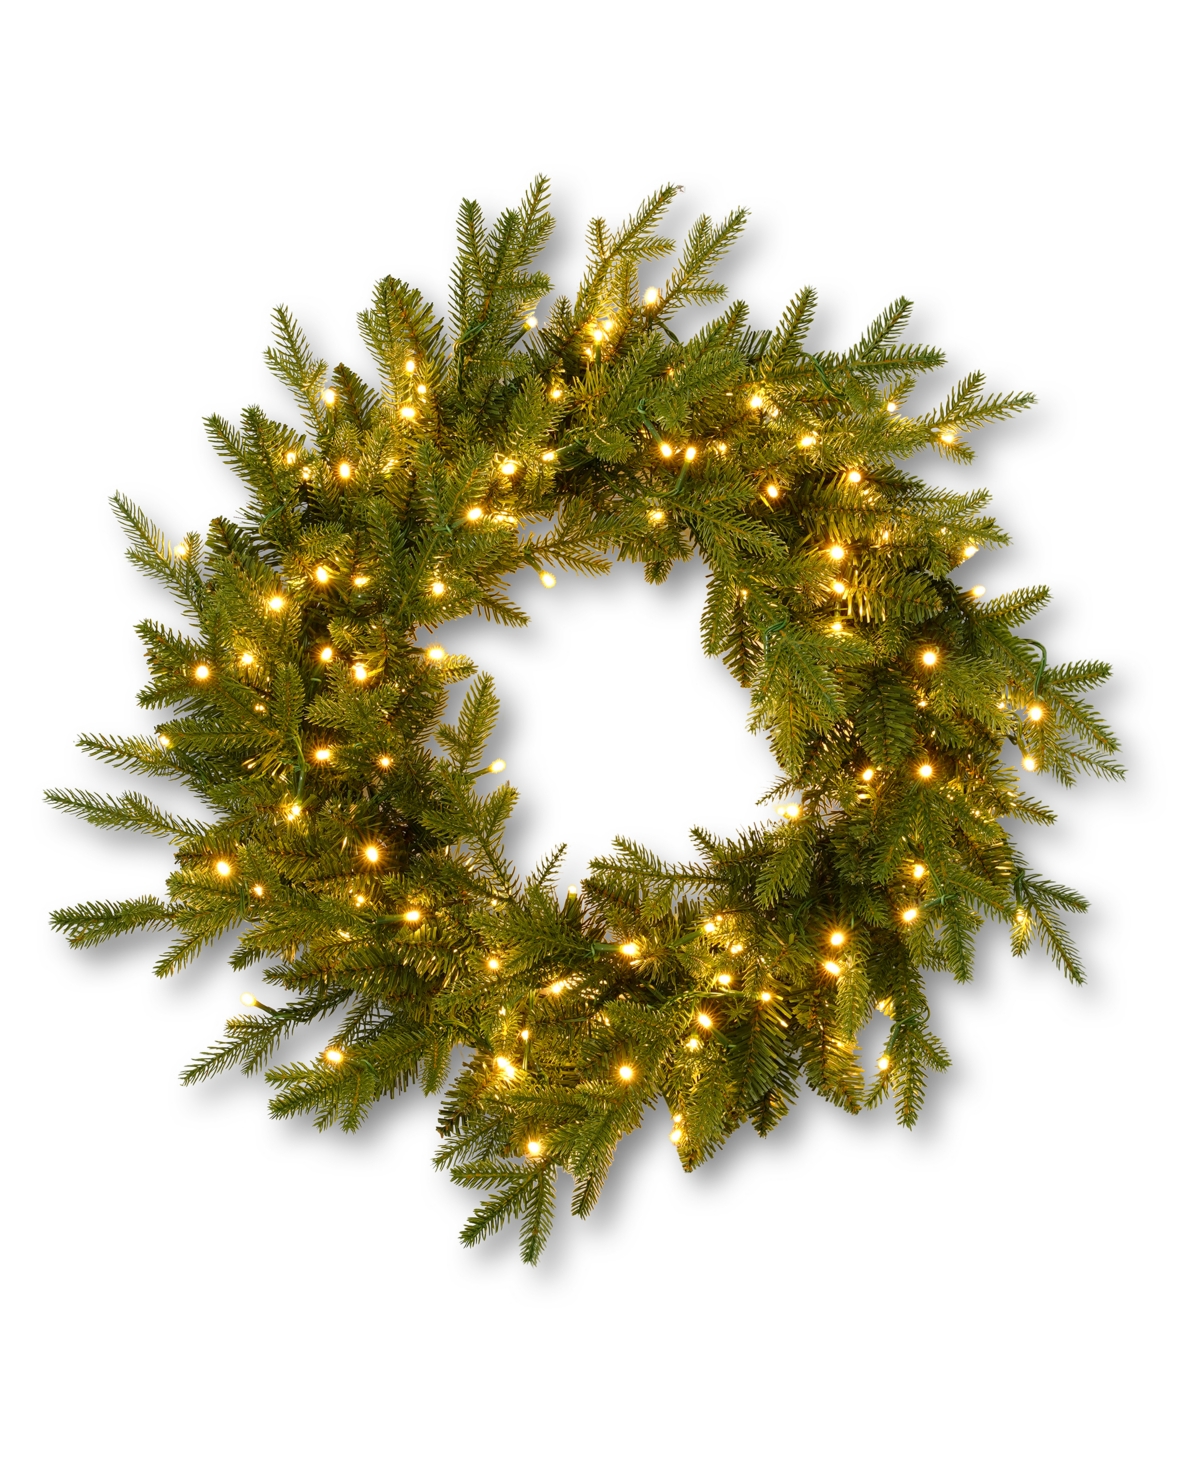 Dandan Pine 24" Pre-Lit Pe Mixed Pvc Wreath with 375 Tips, 150 Warm Led Lights - Green